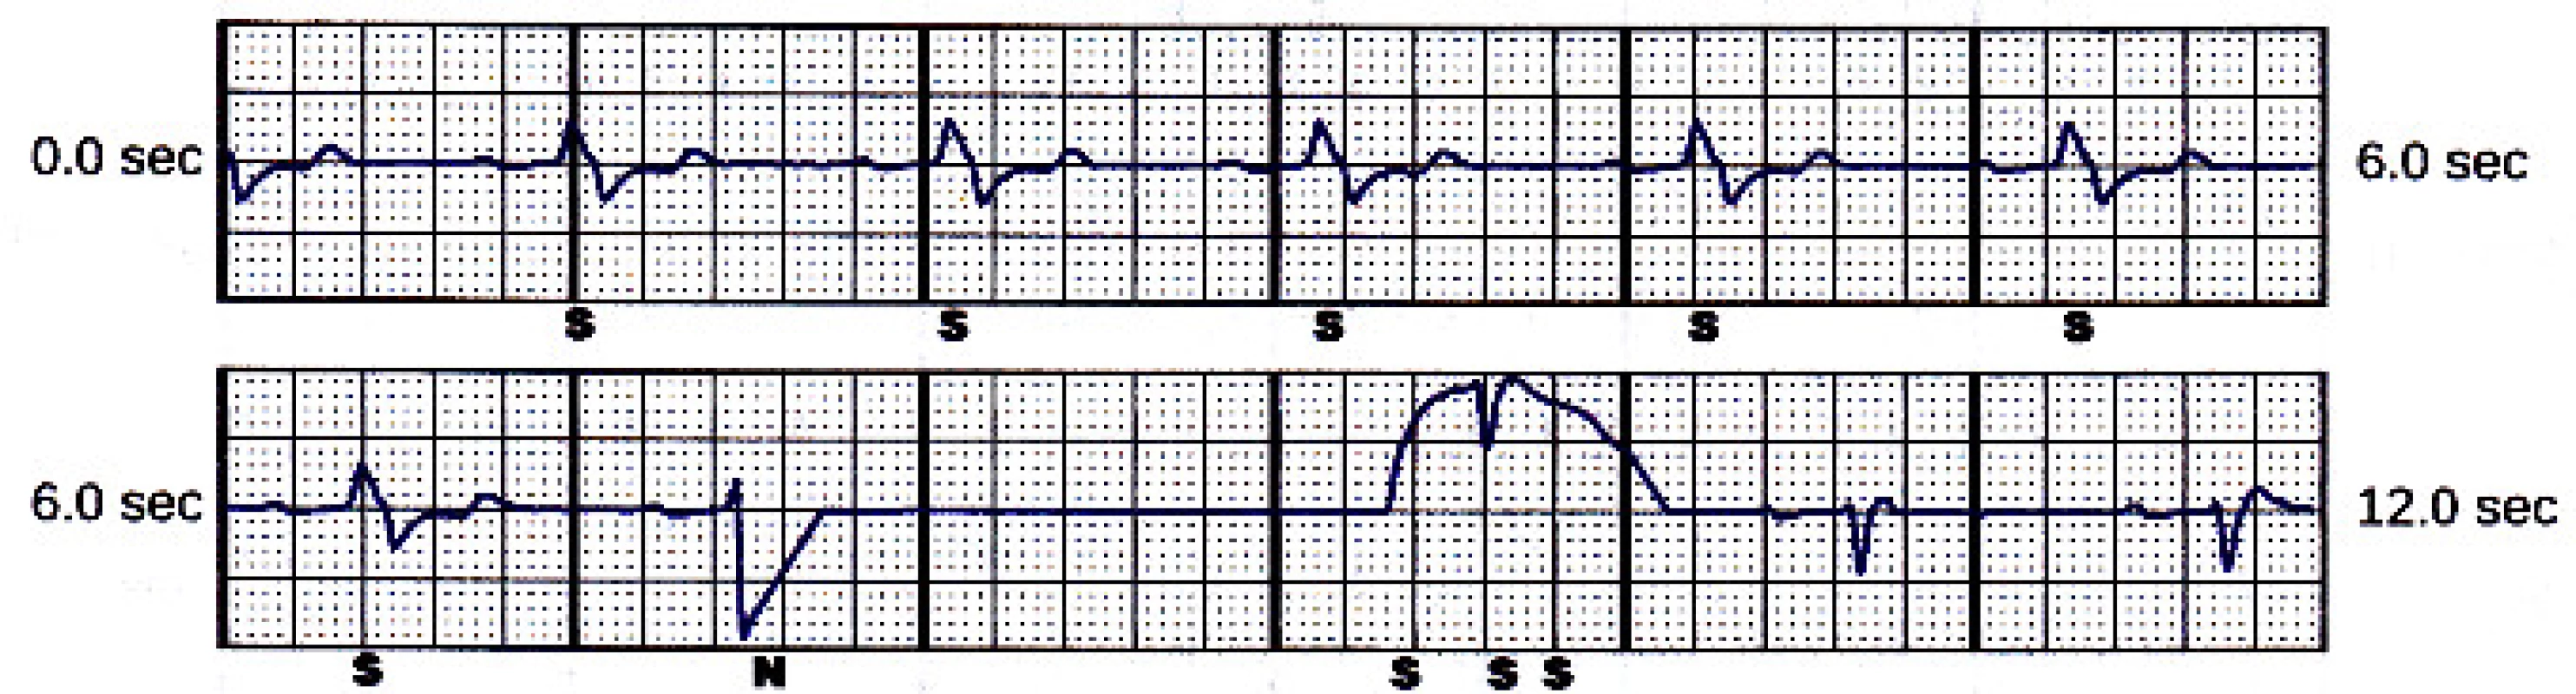 Alternate sensing vector snapshot. Beat
marked “N” is noise